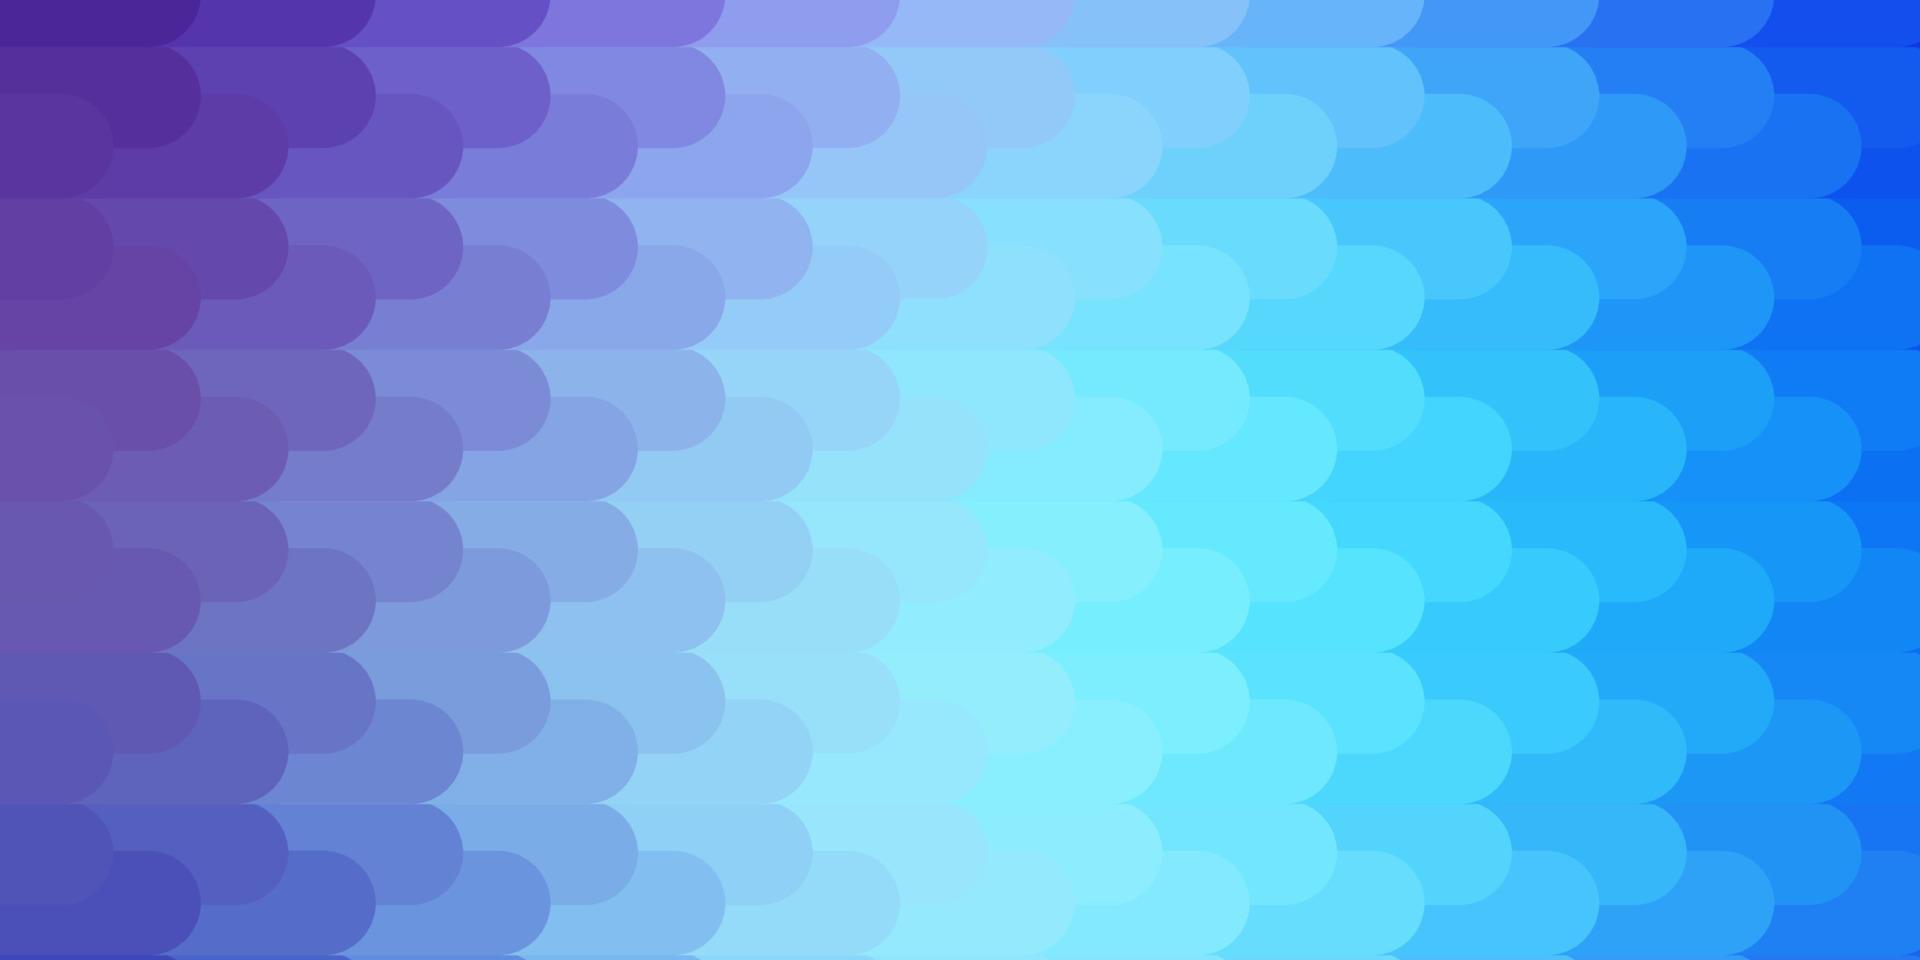 hellrosa, blaues Vektormuster mit Linien. vektor